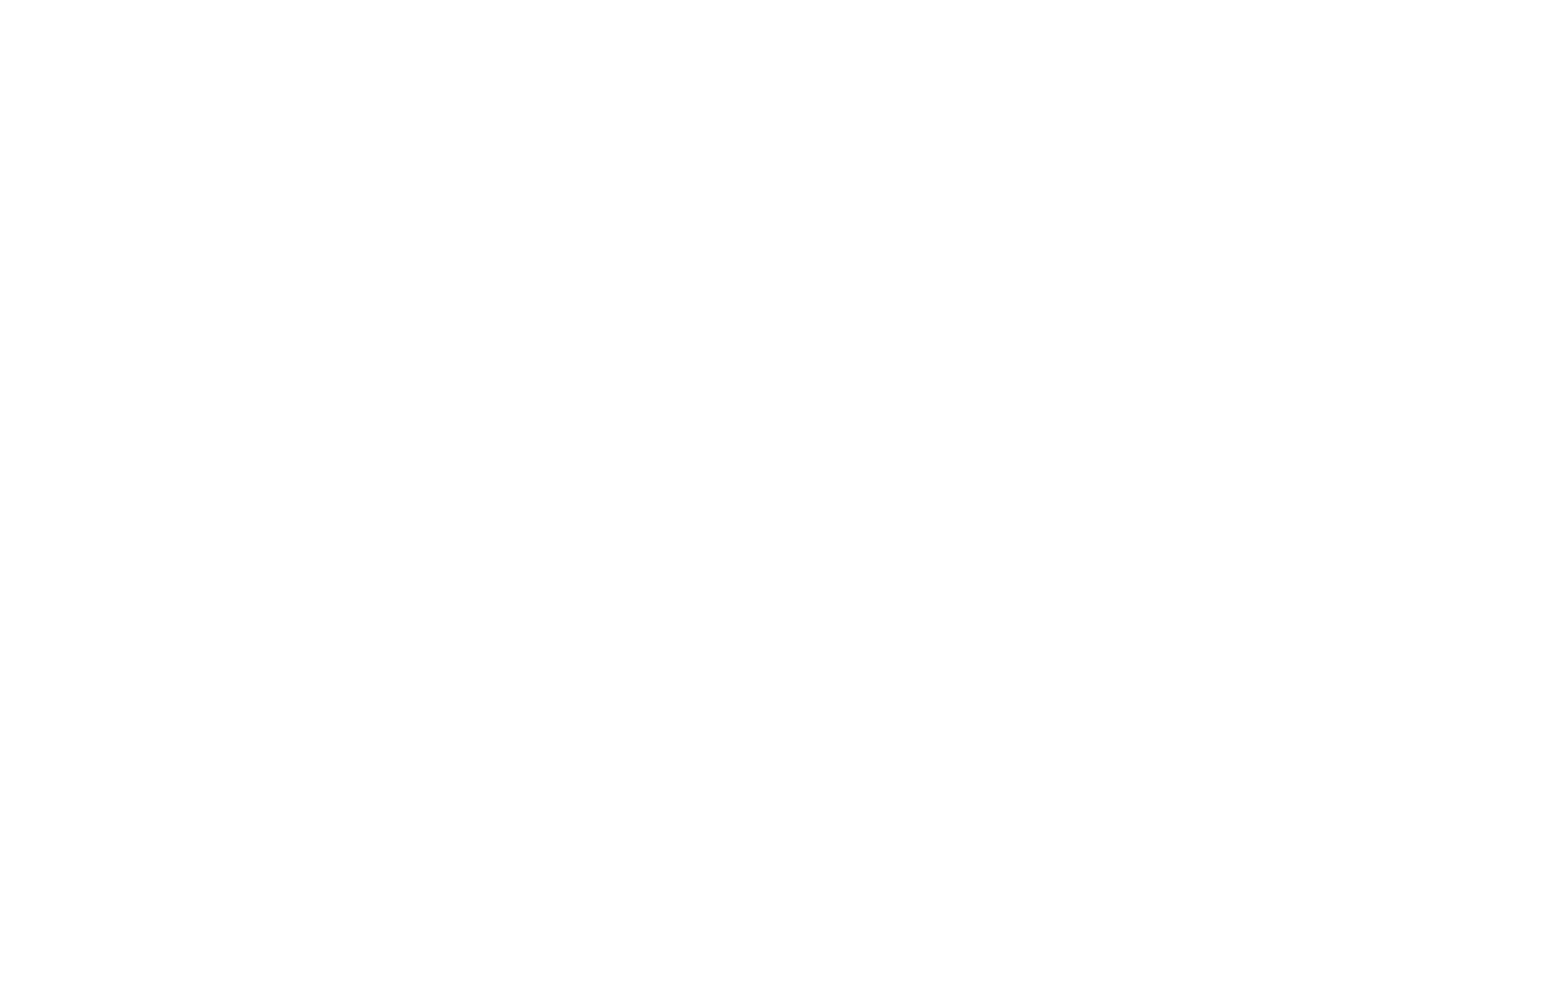 Pharmatech chose Source for a custom intake portal for Drug Compliance